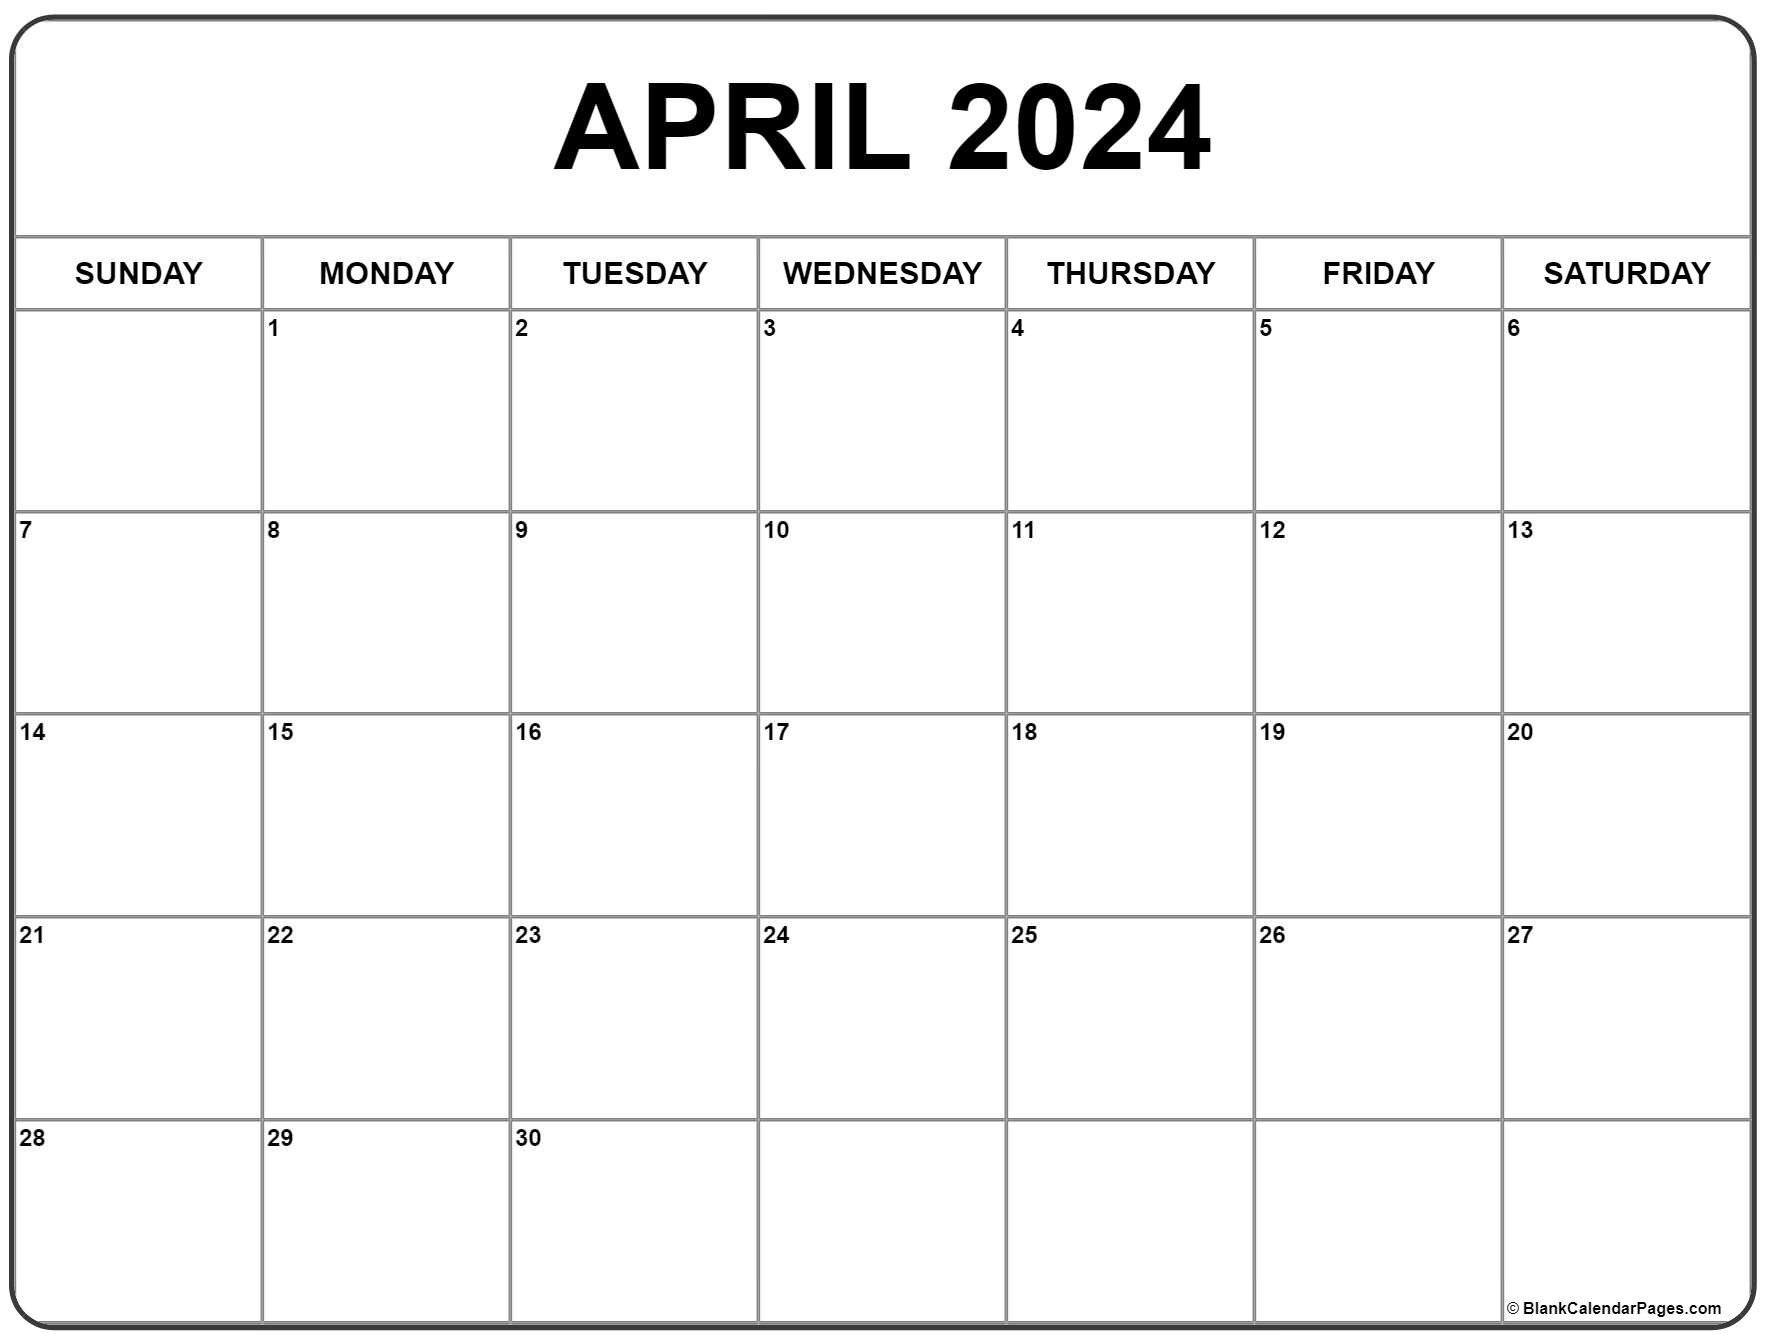 April 2024 Calendar | Free Printable Calendar for Printable April Calendar 2024